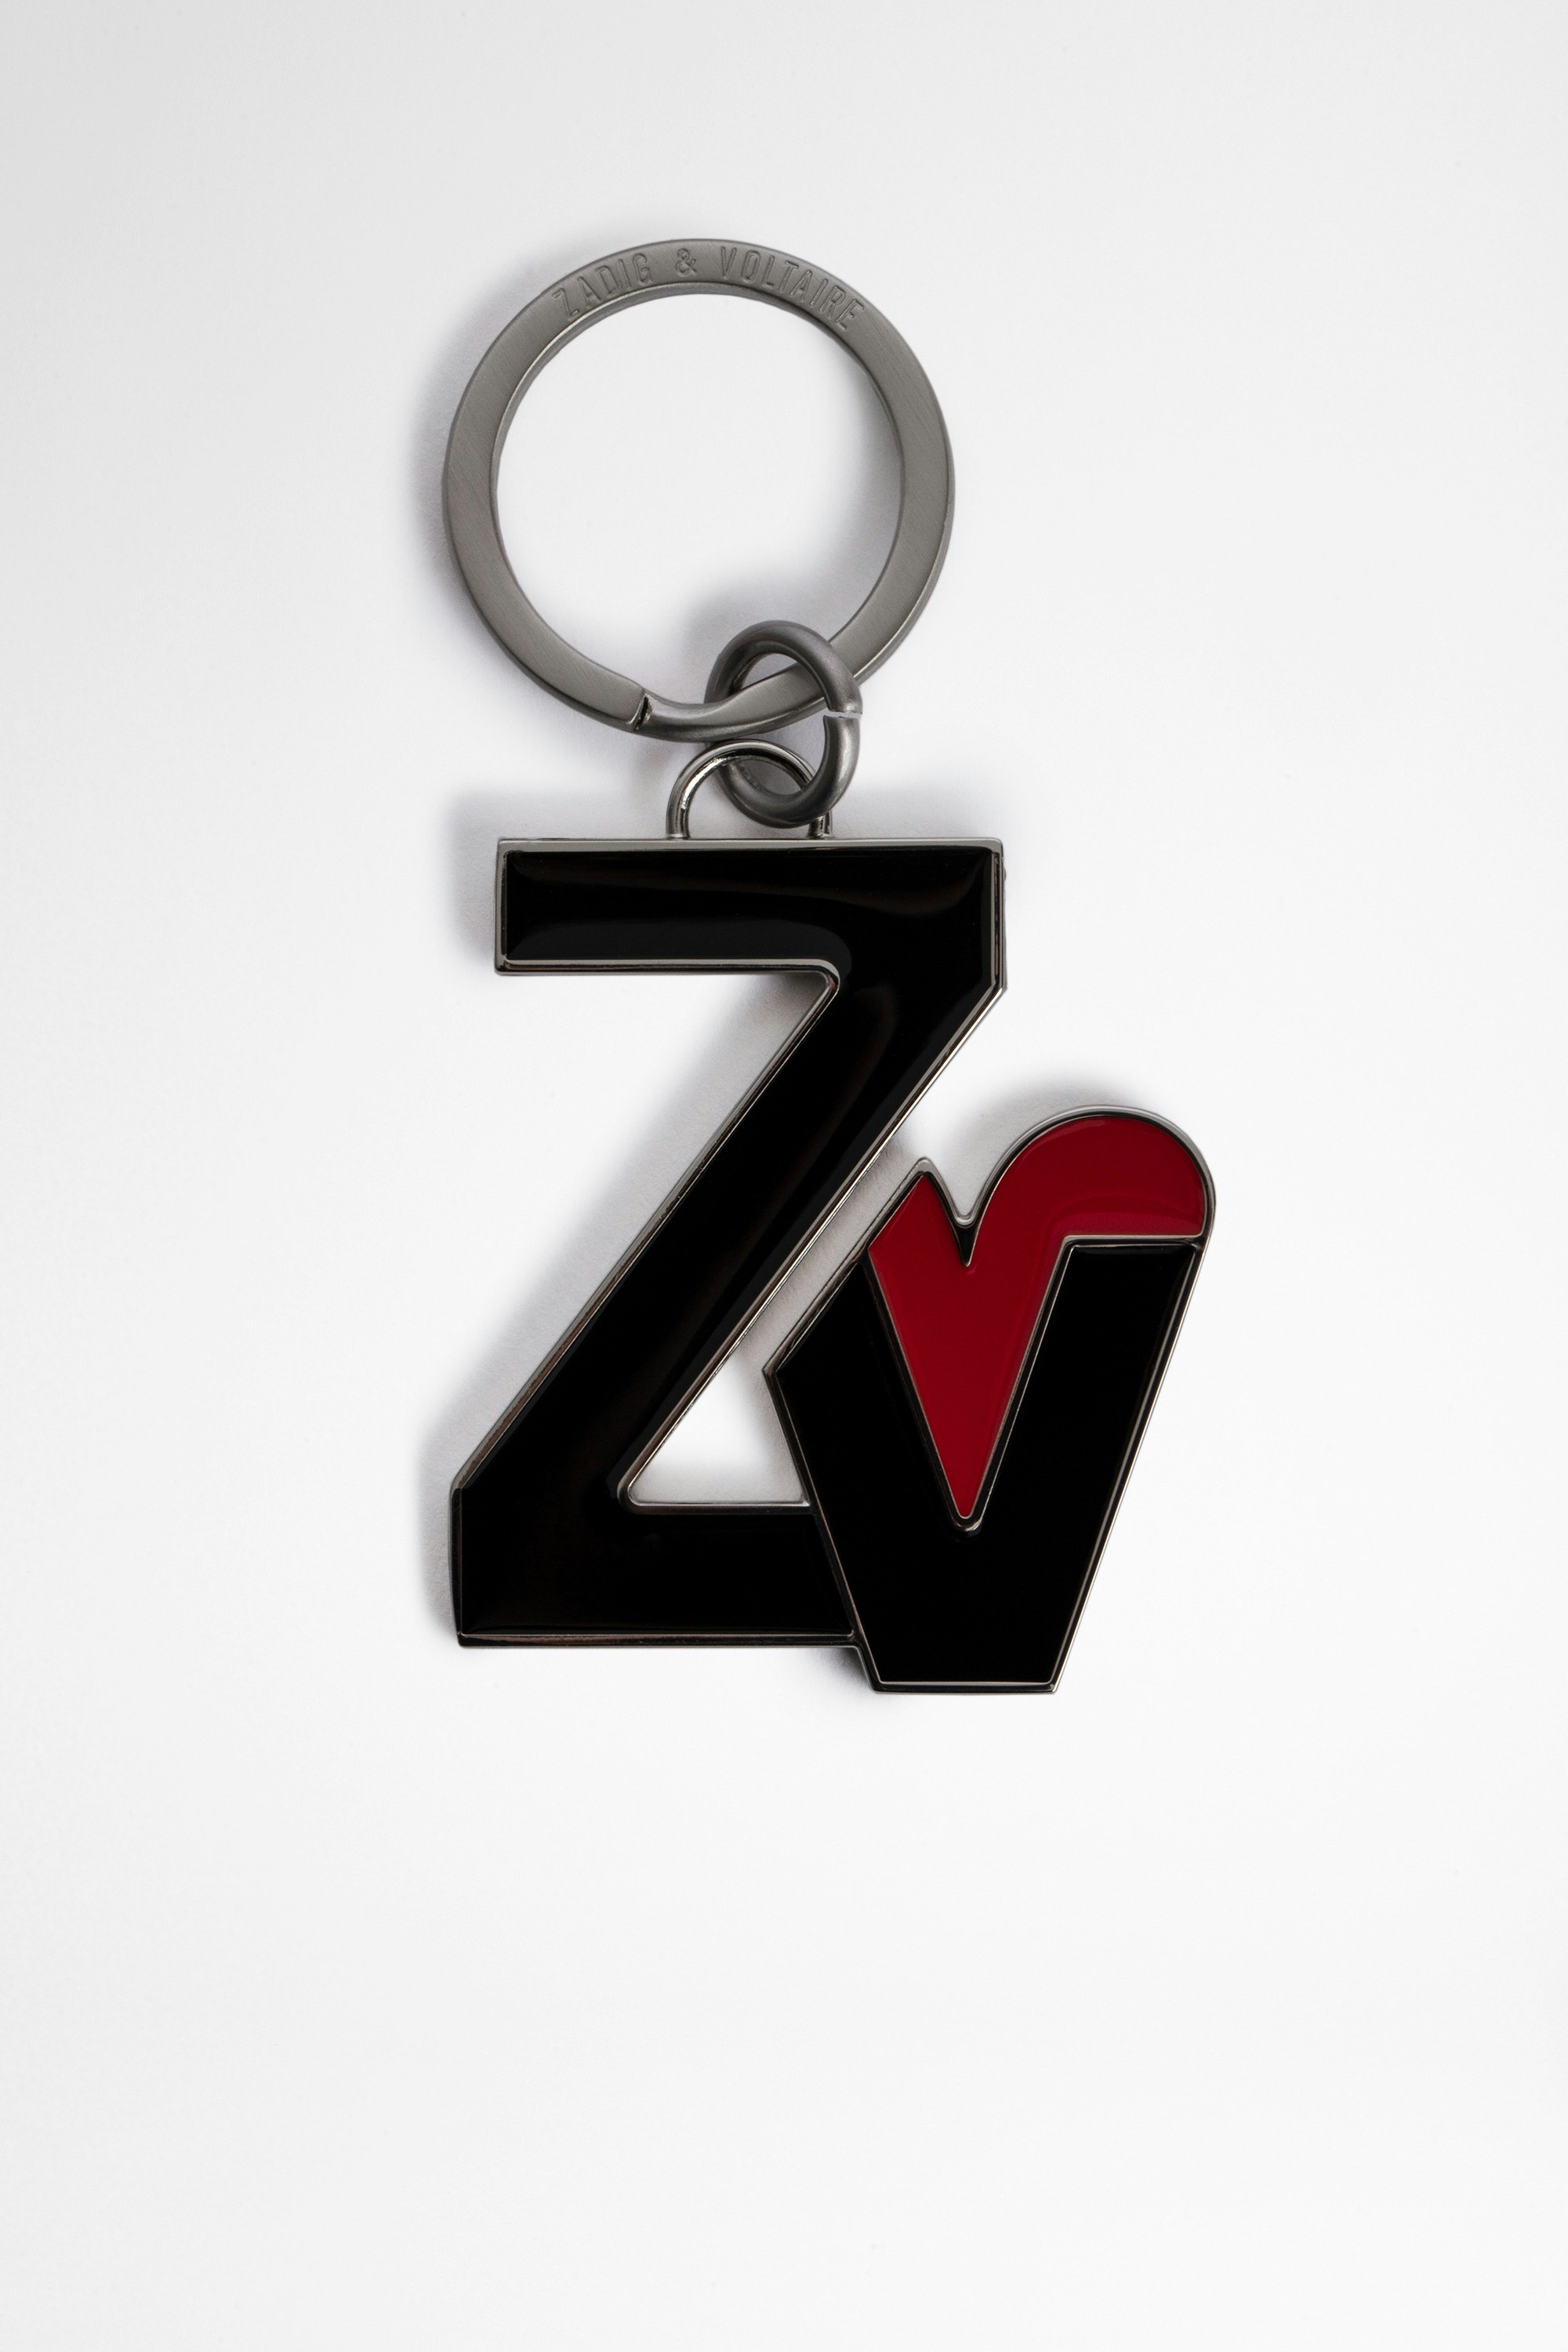 ZV Crush Key 指輪 Women’s ZV heart key ring